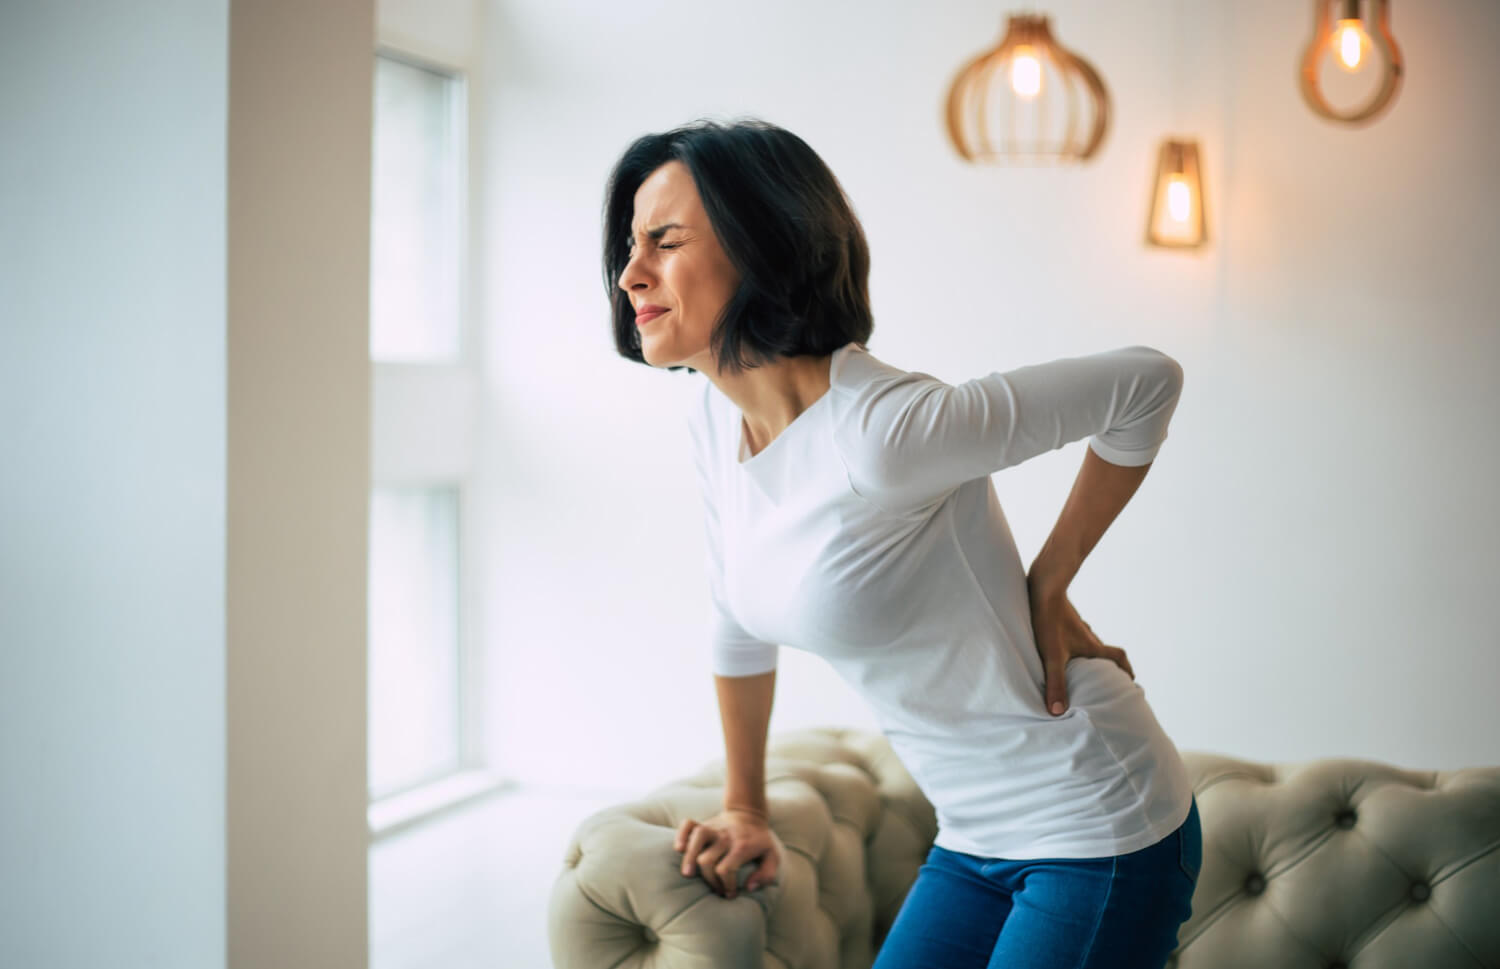 Symptoms of Lower Back Pain